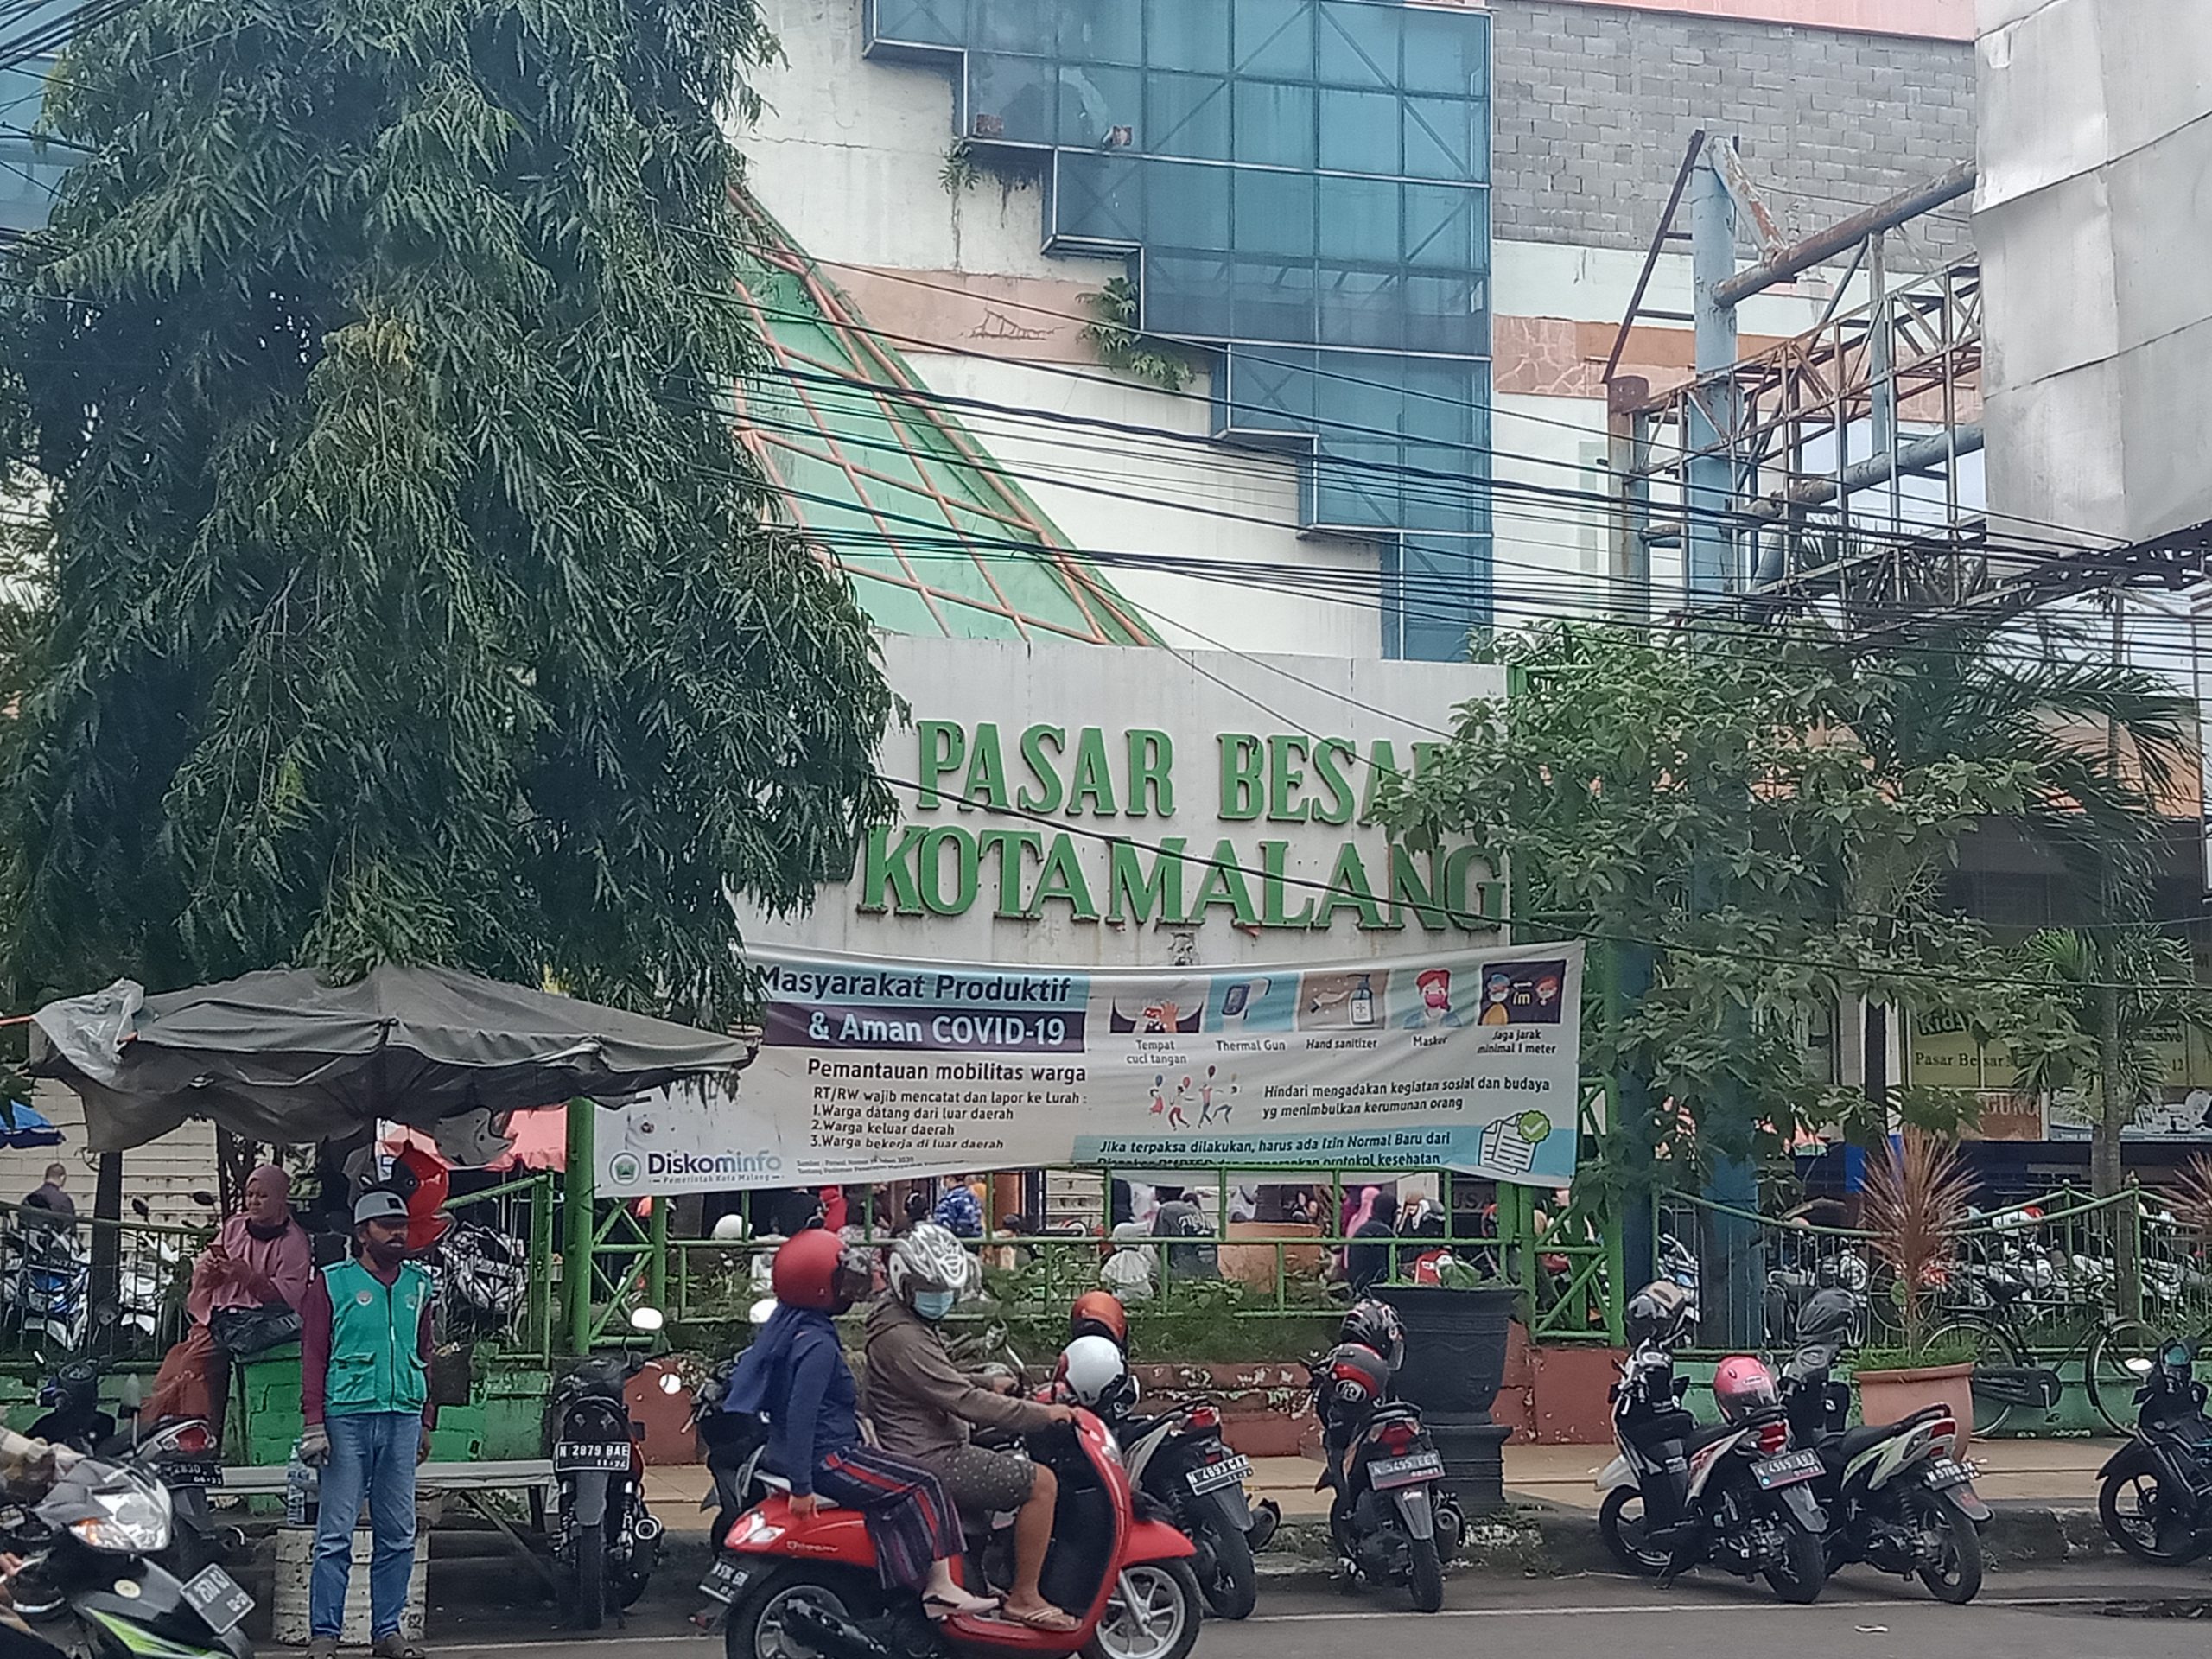 Pembangunan Pasar Besar Kota Malang Tak Akan Dilakukan hingga Tahun 2022